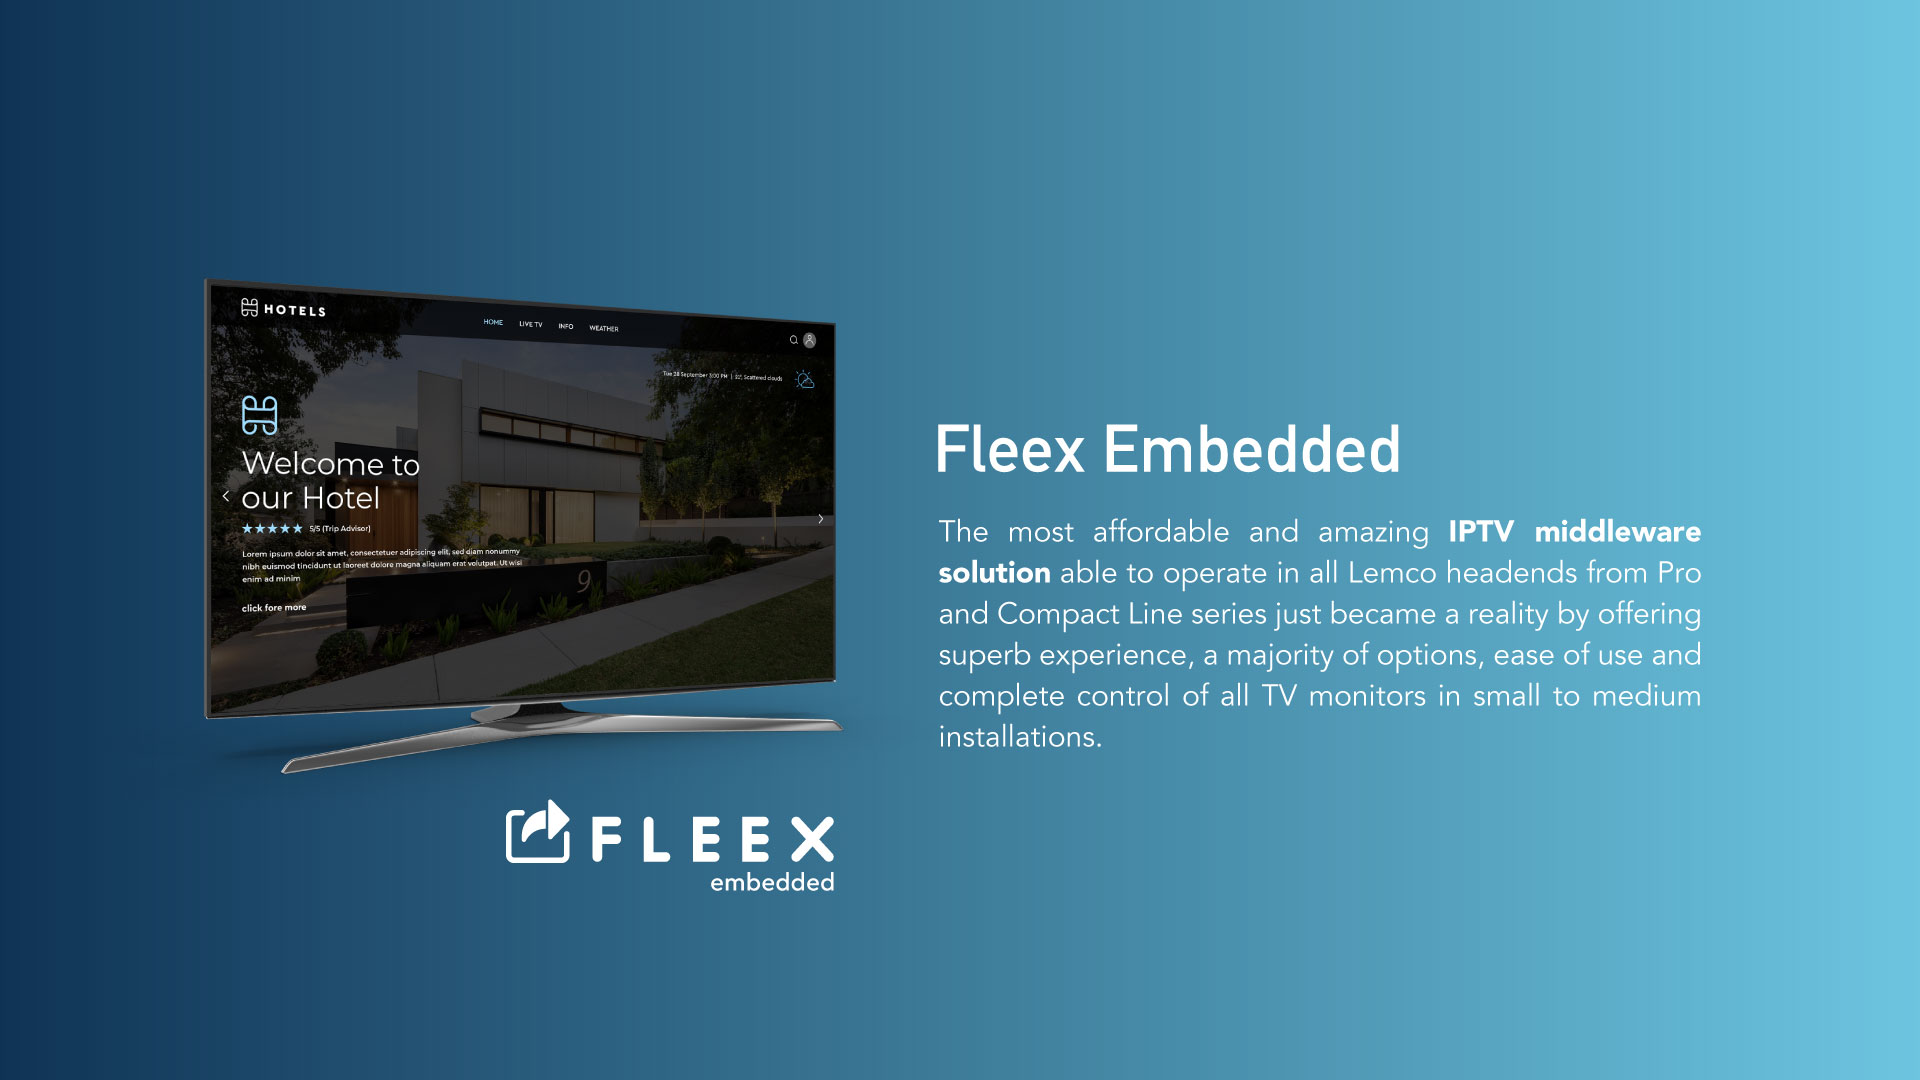 Fleex Embedded